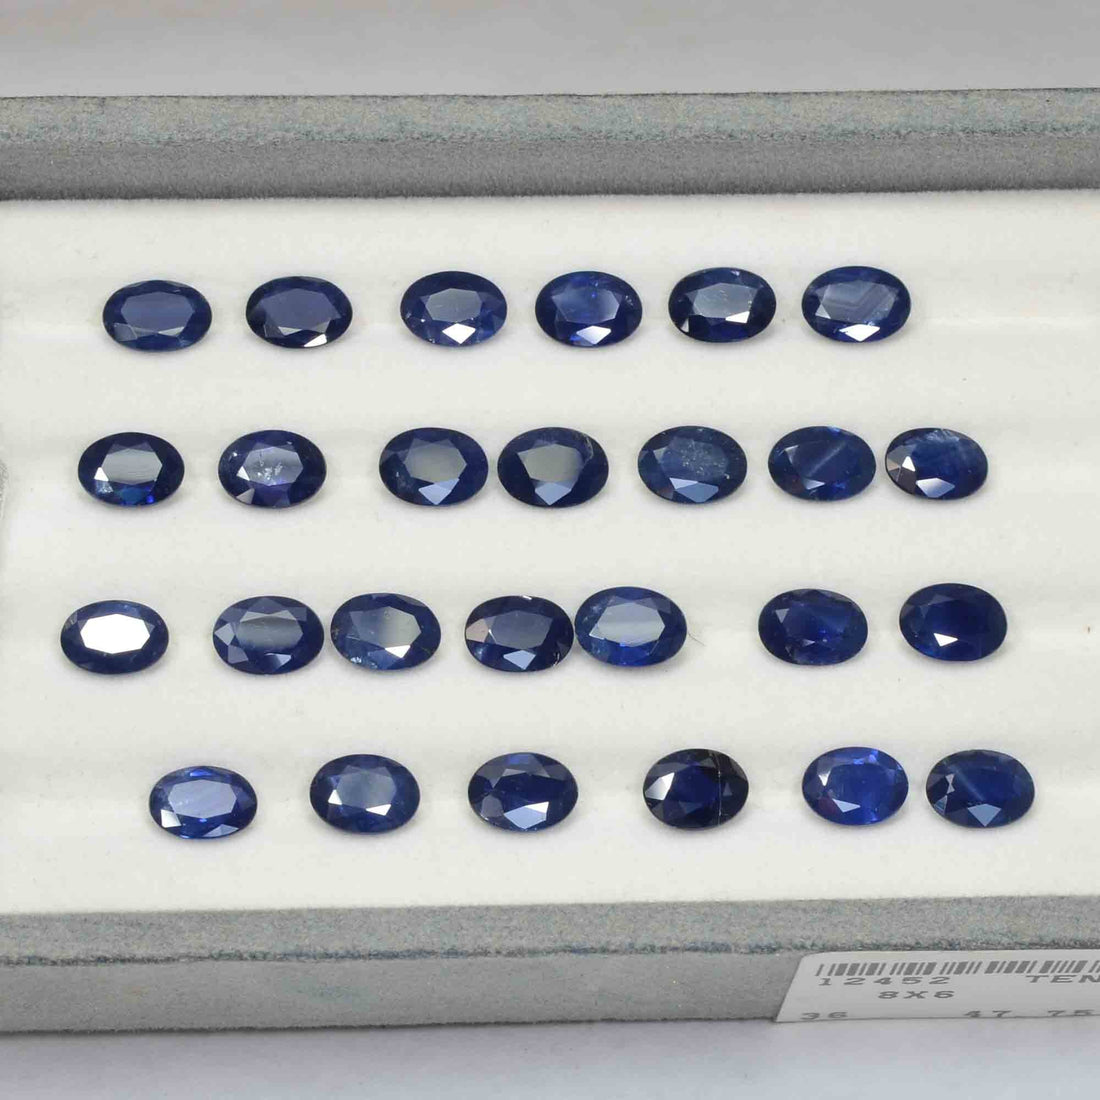 8x6 MM Natural Blue Sapphire Loose Gemstone Oval Cut